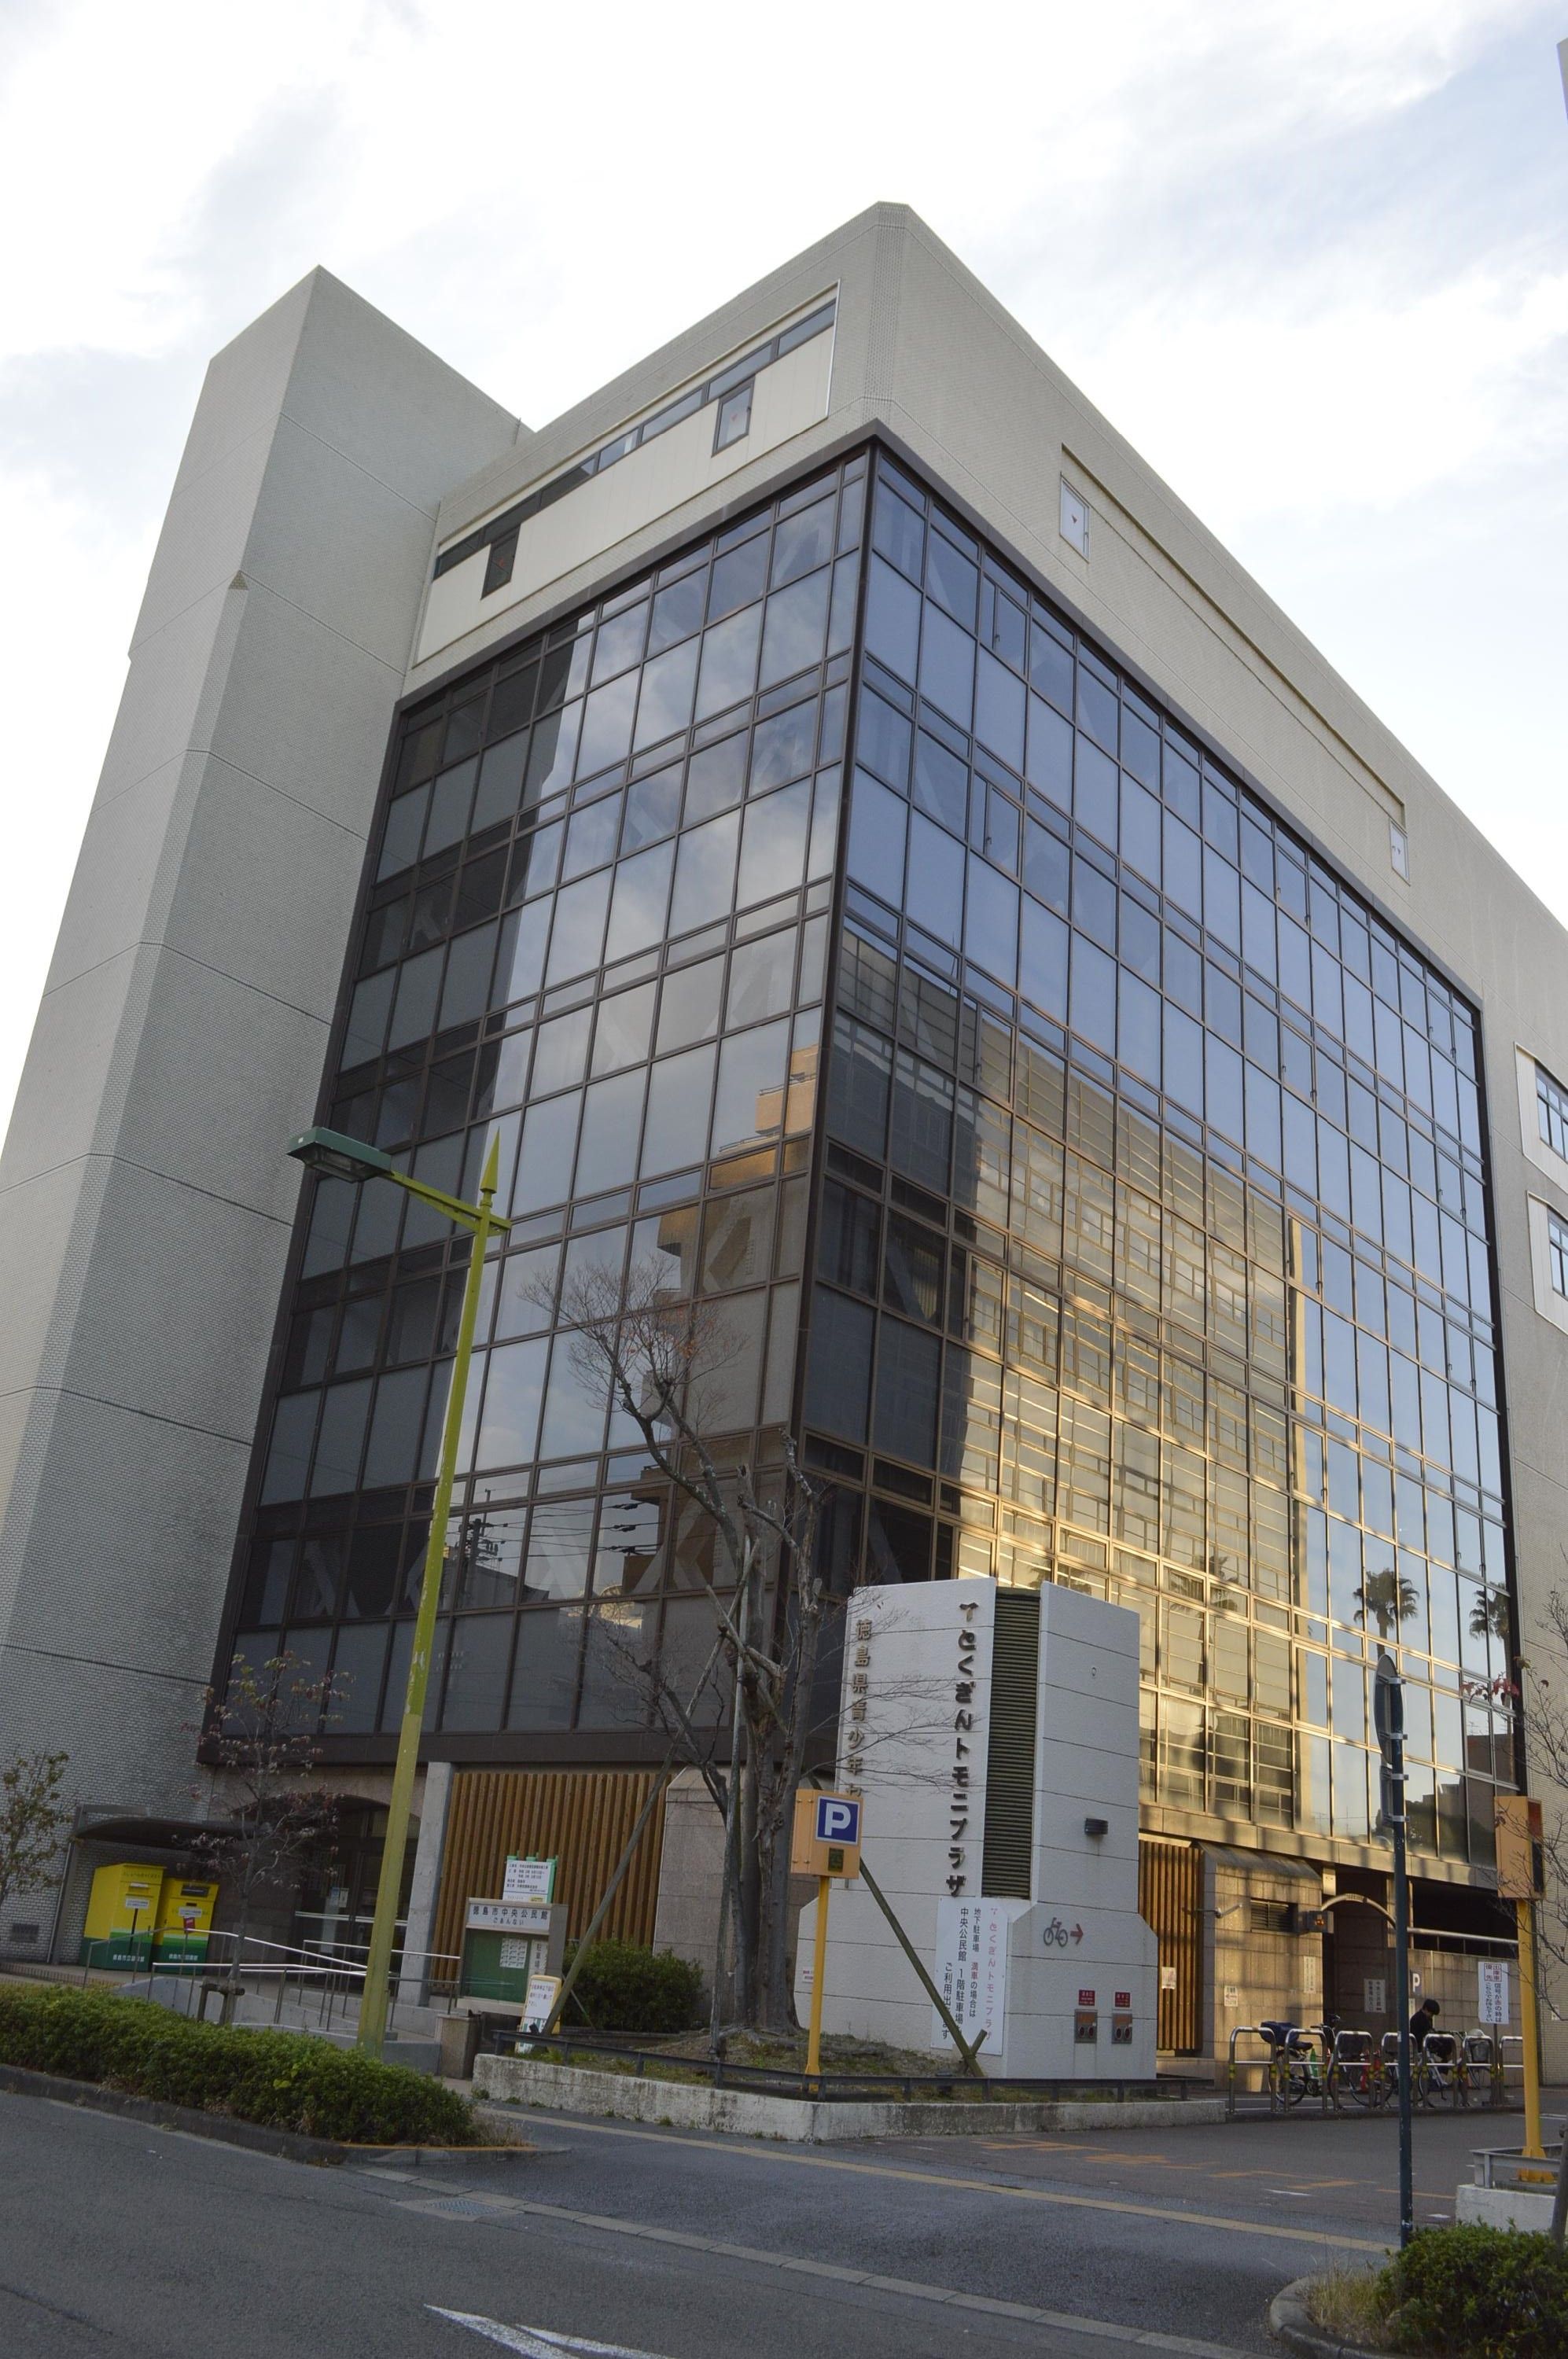 新ホール整備で解体の中央公民館　移動図書館12万冊書庫を移転　徳島市議会委、関連予算案可決